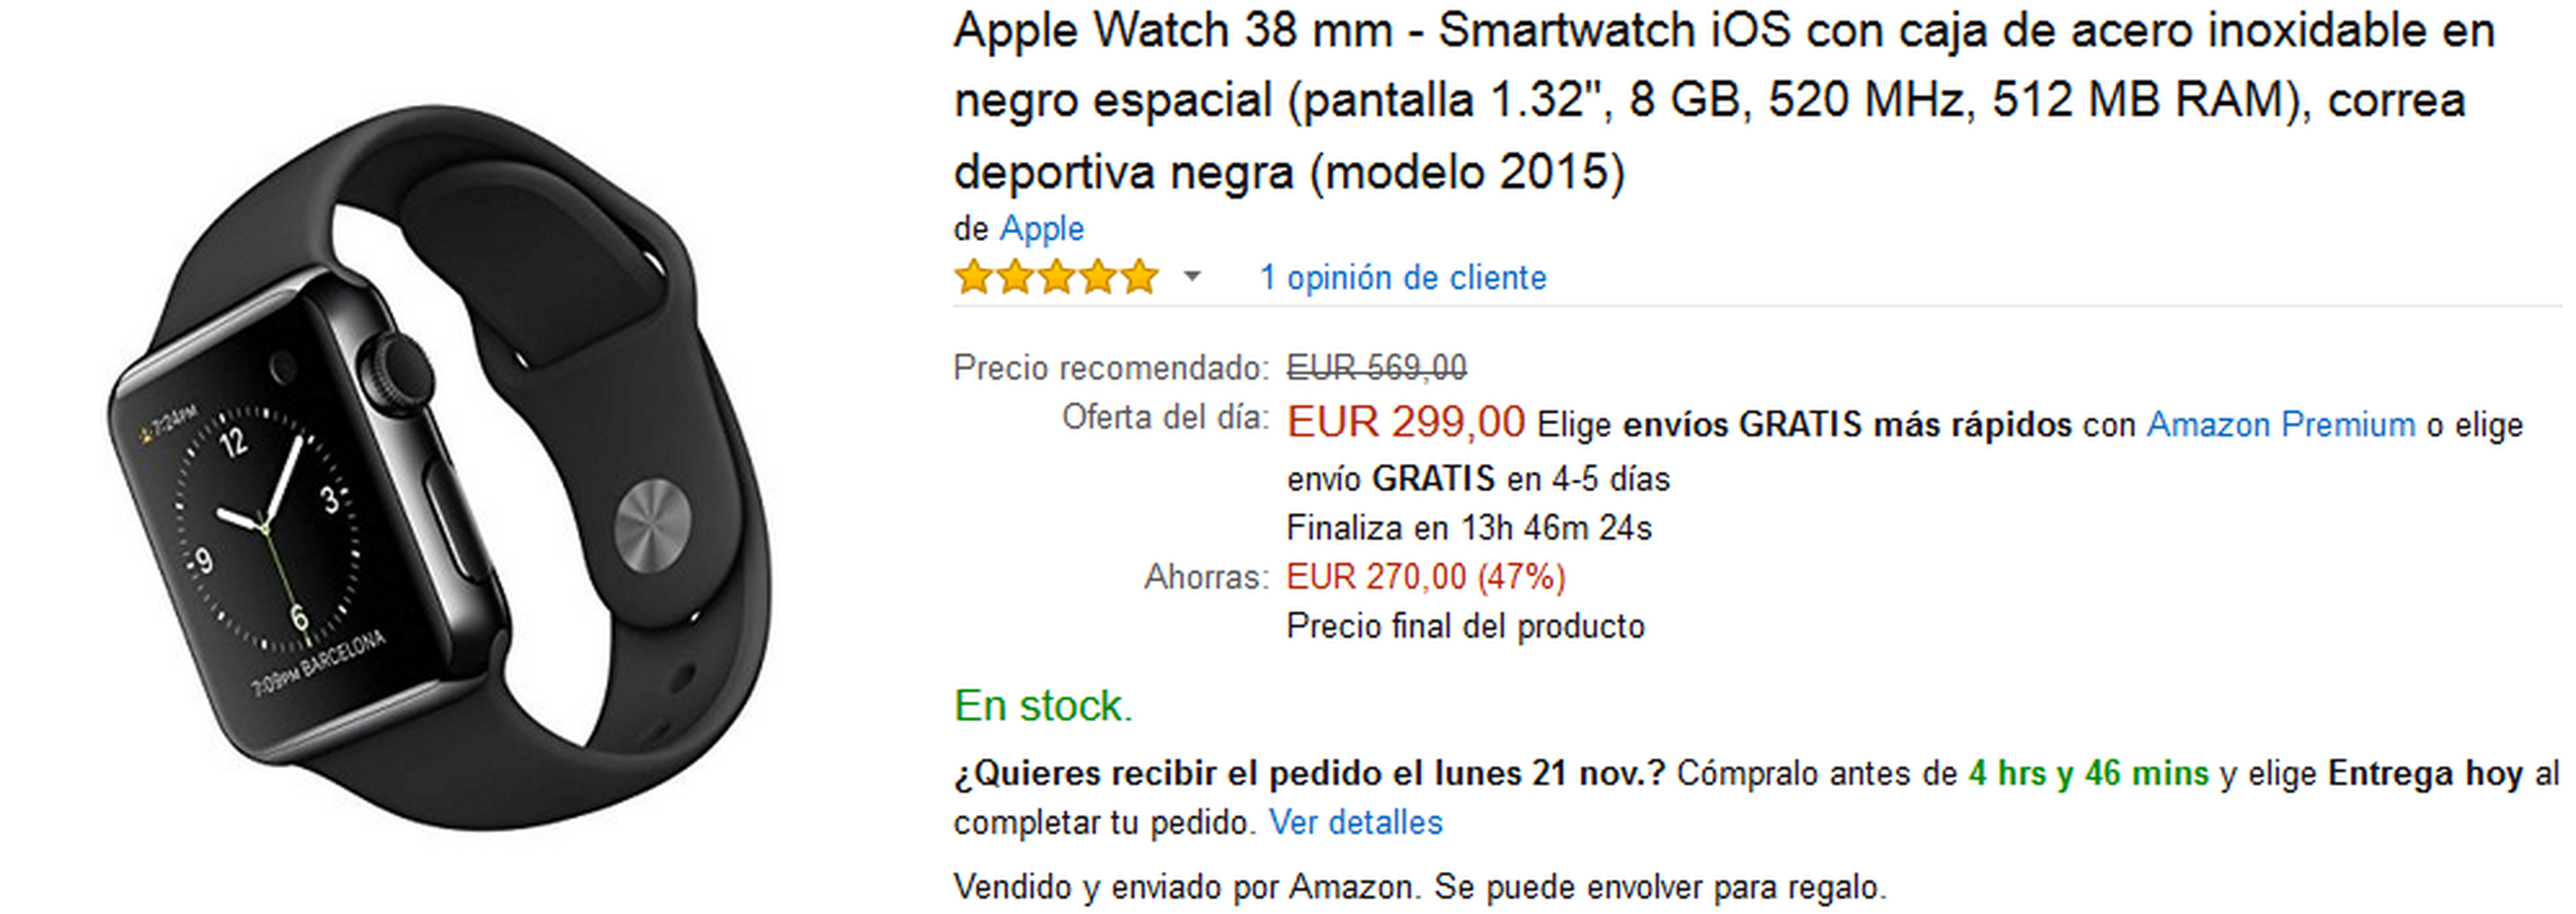 Apple Watch 38 mm por 299 €